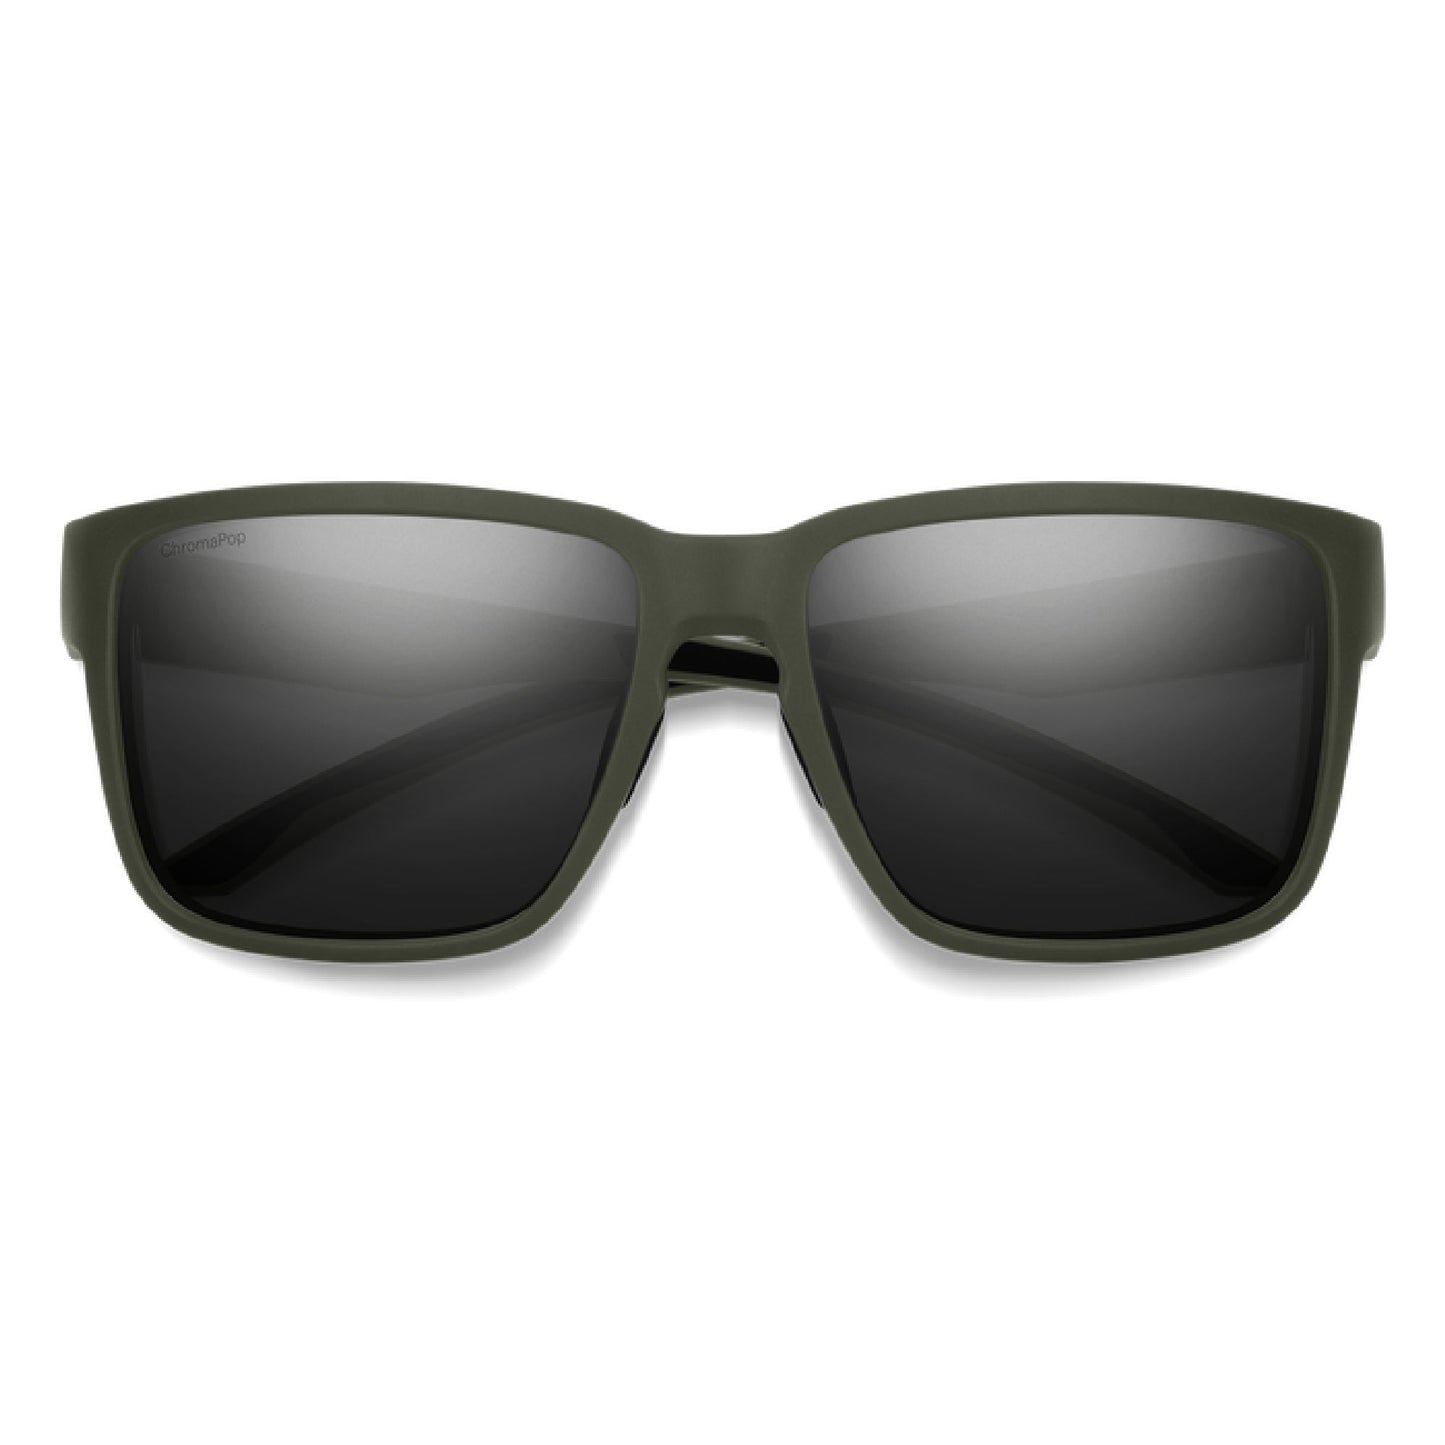 Smith Emerge Sunglasses Matte Moss / ChromaPop Polarized Black Sunglasses